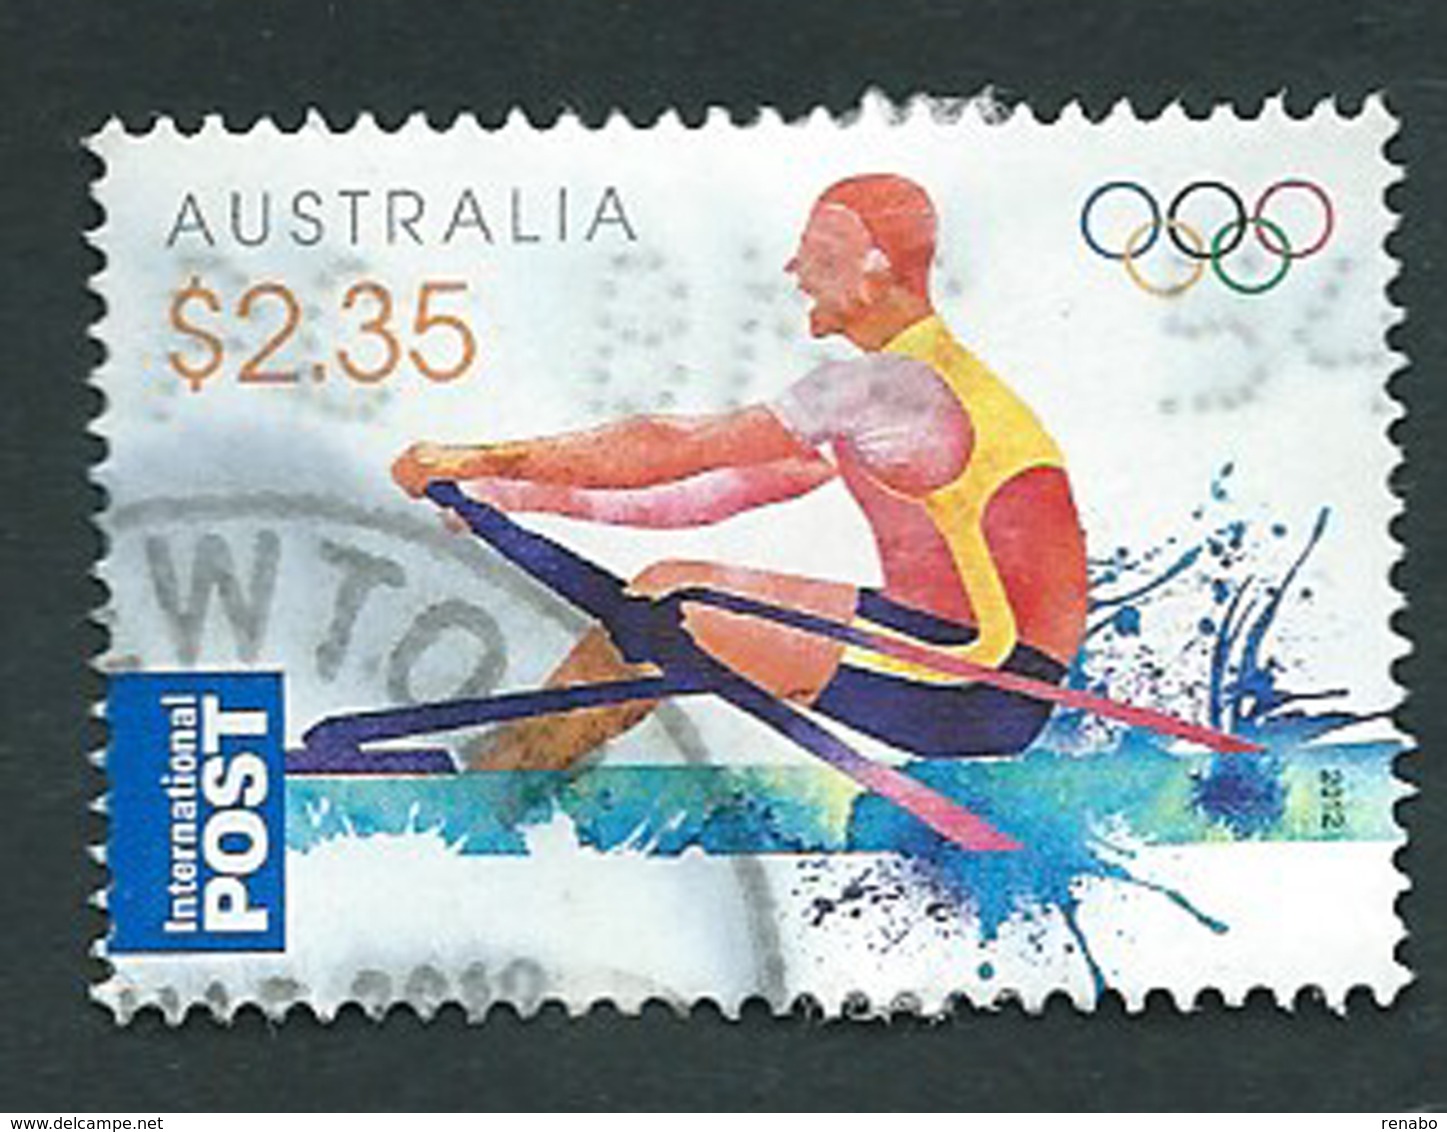 Australia, Australien, Australie 2012; Canottaggio, Rowing $2.35 ; London Olympic Games. Used. - Canottaggio